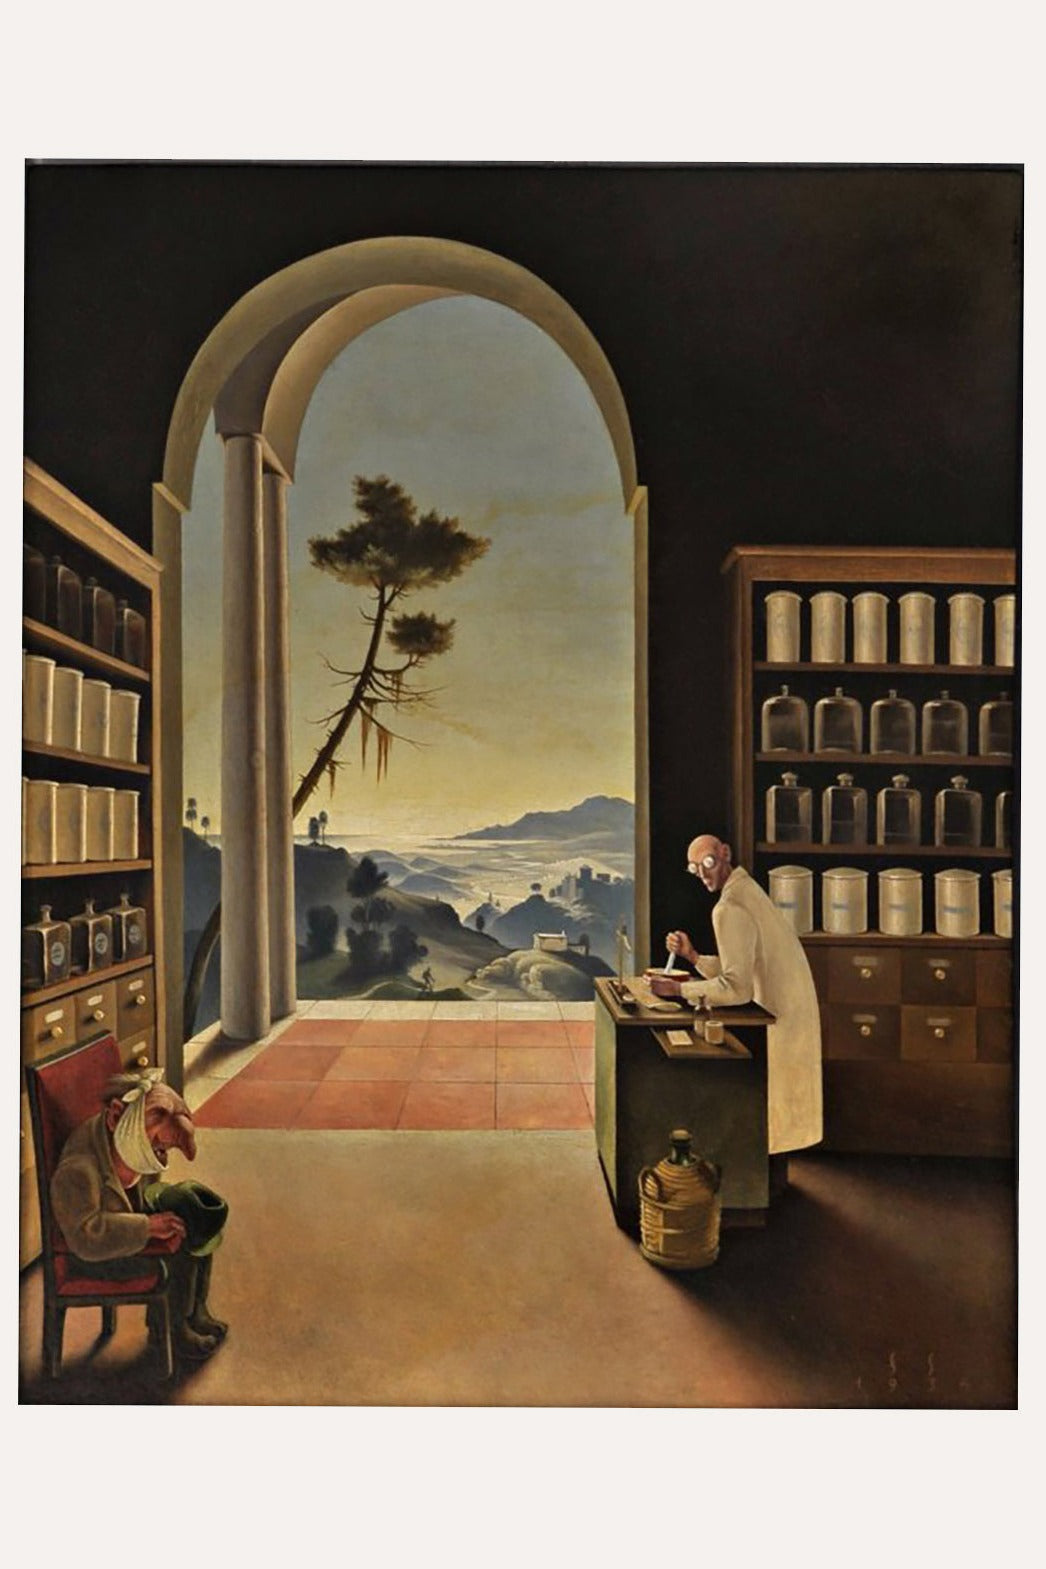 Die Apotheke (The Pharmacy) by Franz Sedlacek, 1934 - Postcard